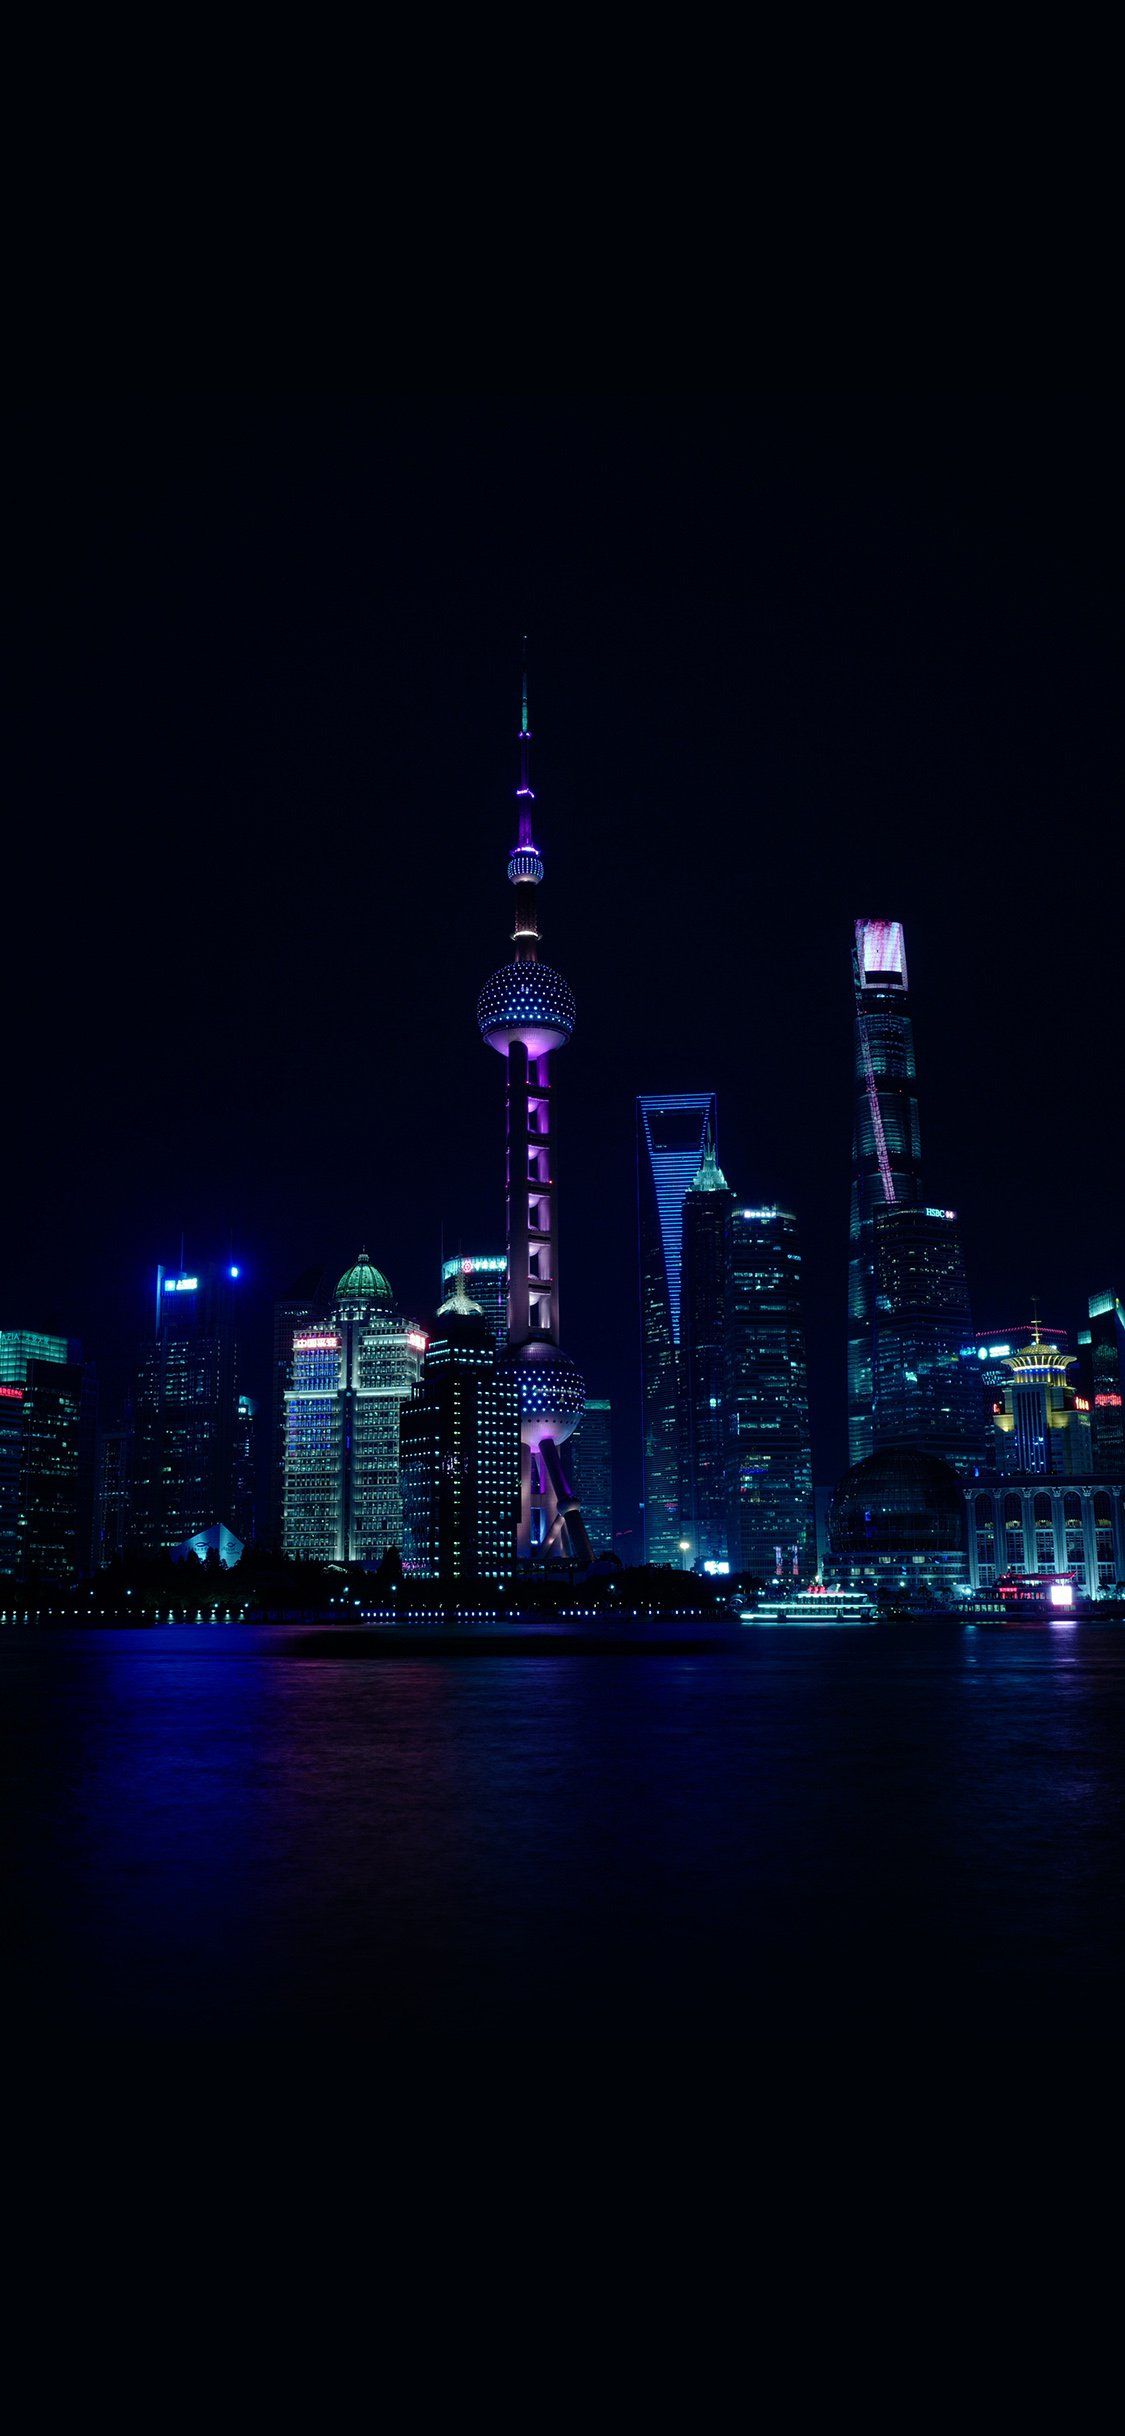 China night city iPhone X Wallpaper Free Download